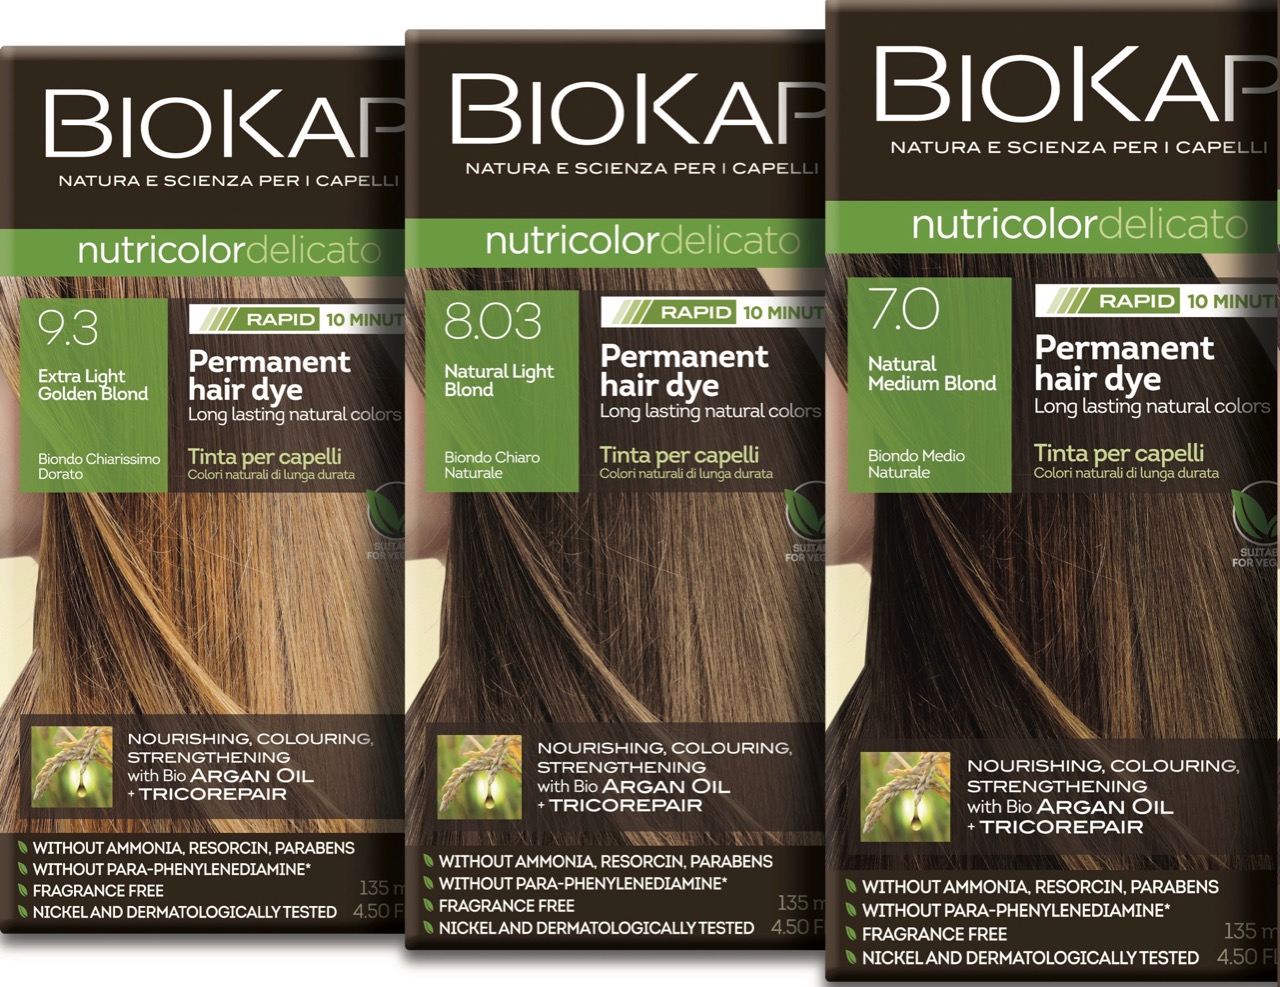 Biokap introduces 10-minute natural hair dye to UK -